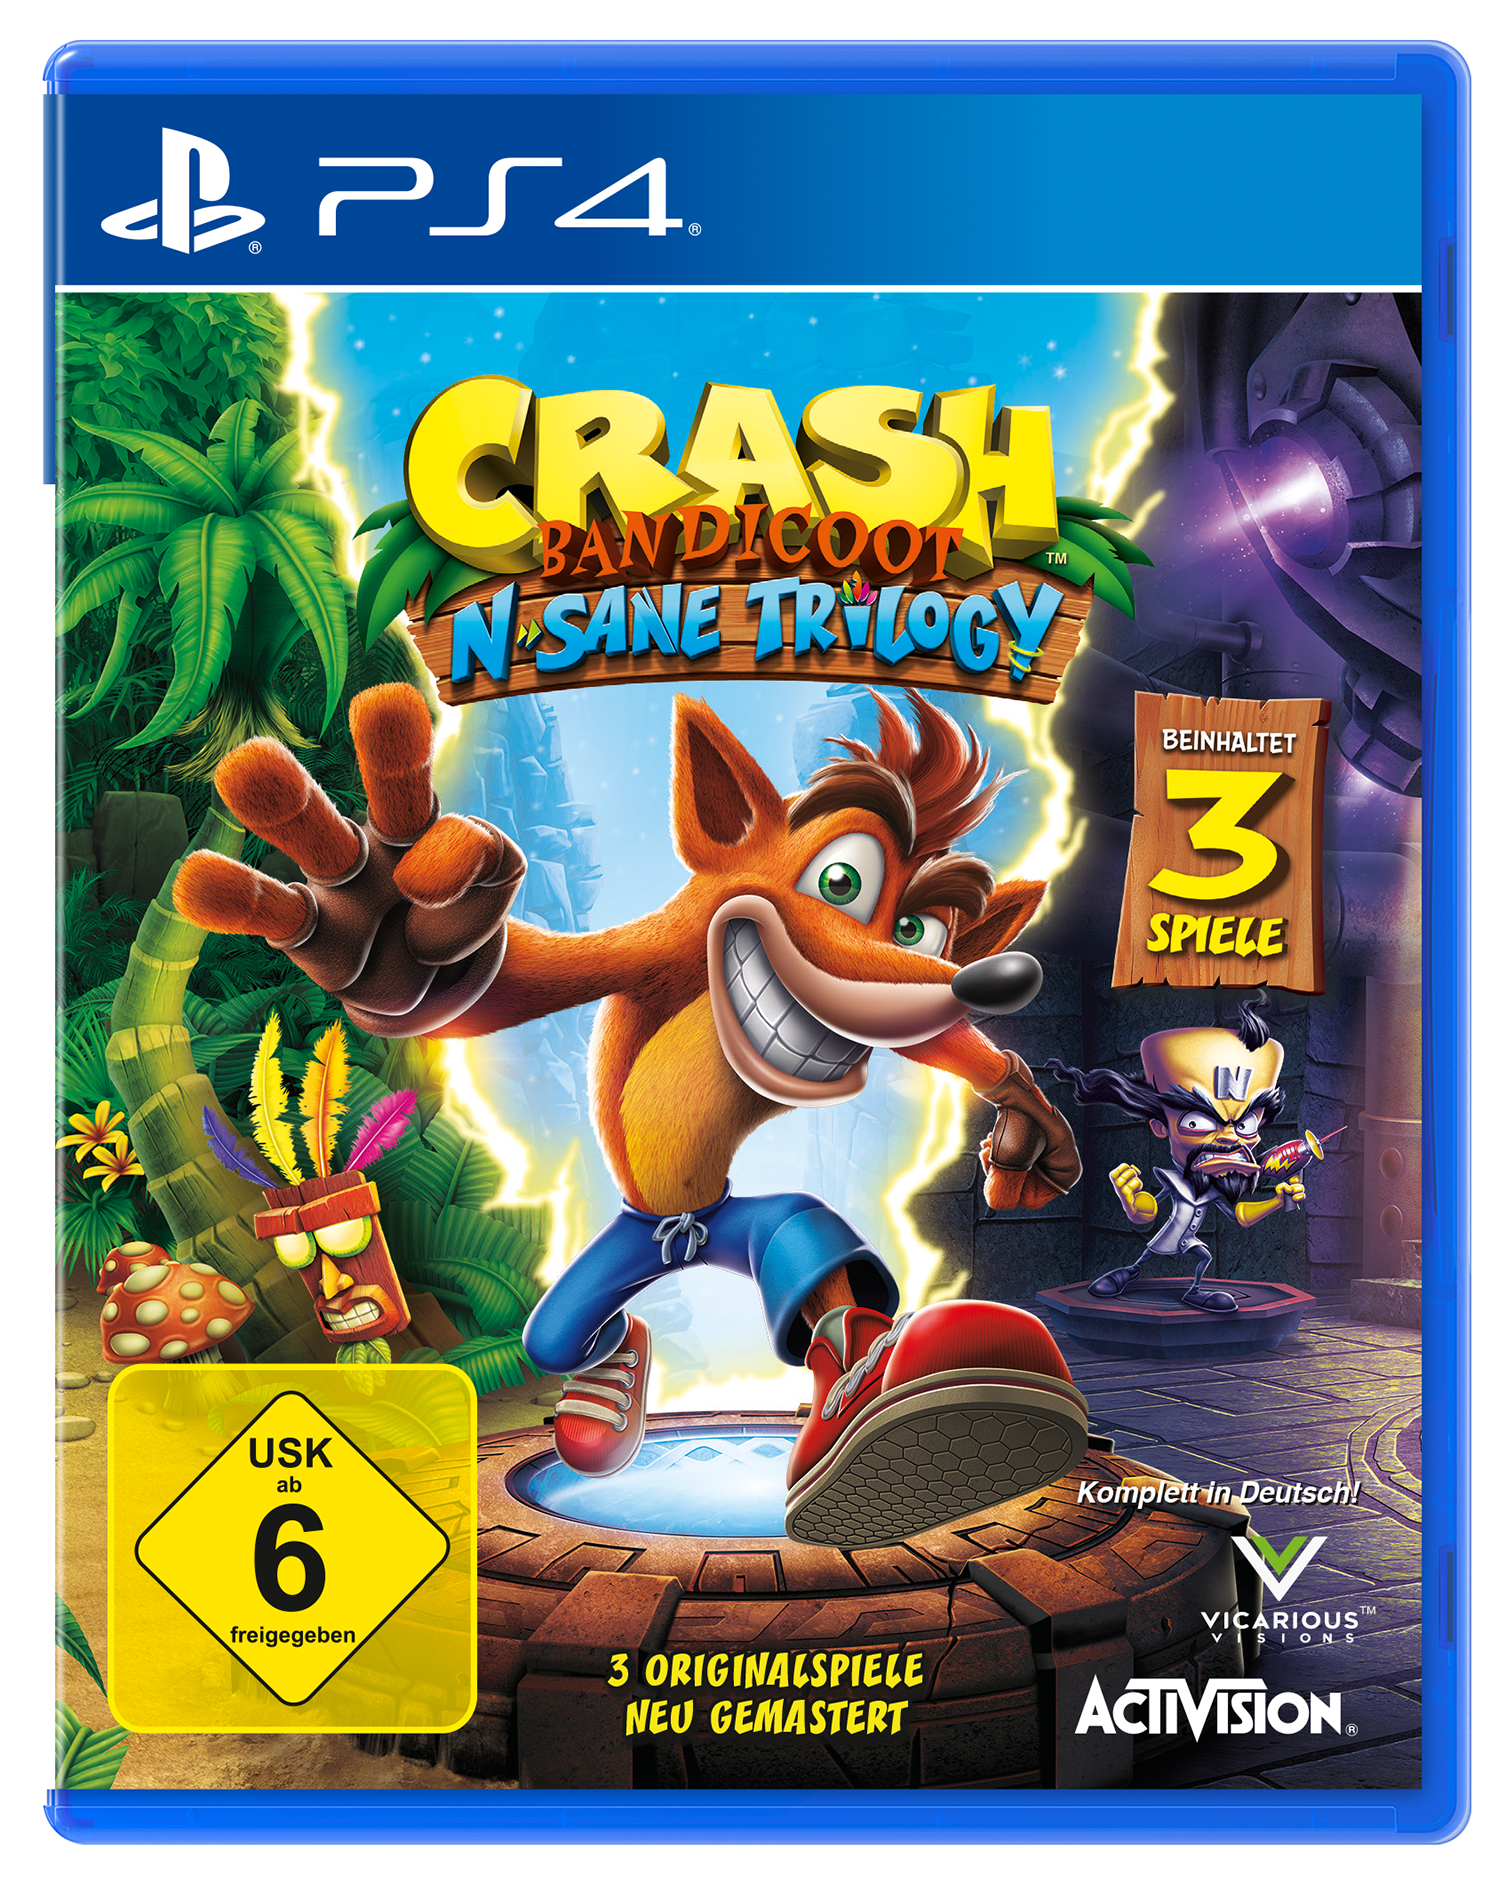 hundehvalp Immunitet Wade PS4 Spiel Crash Bandicoot - N.Sane Trilogy | Kaufland.de